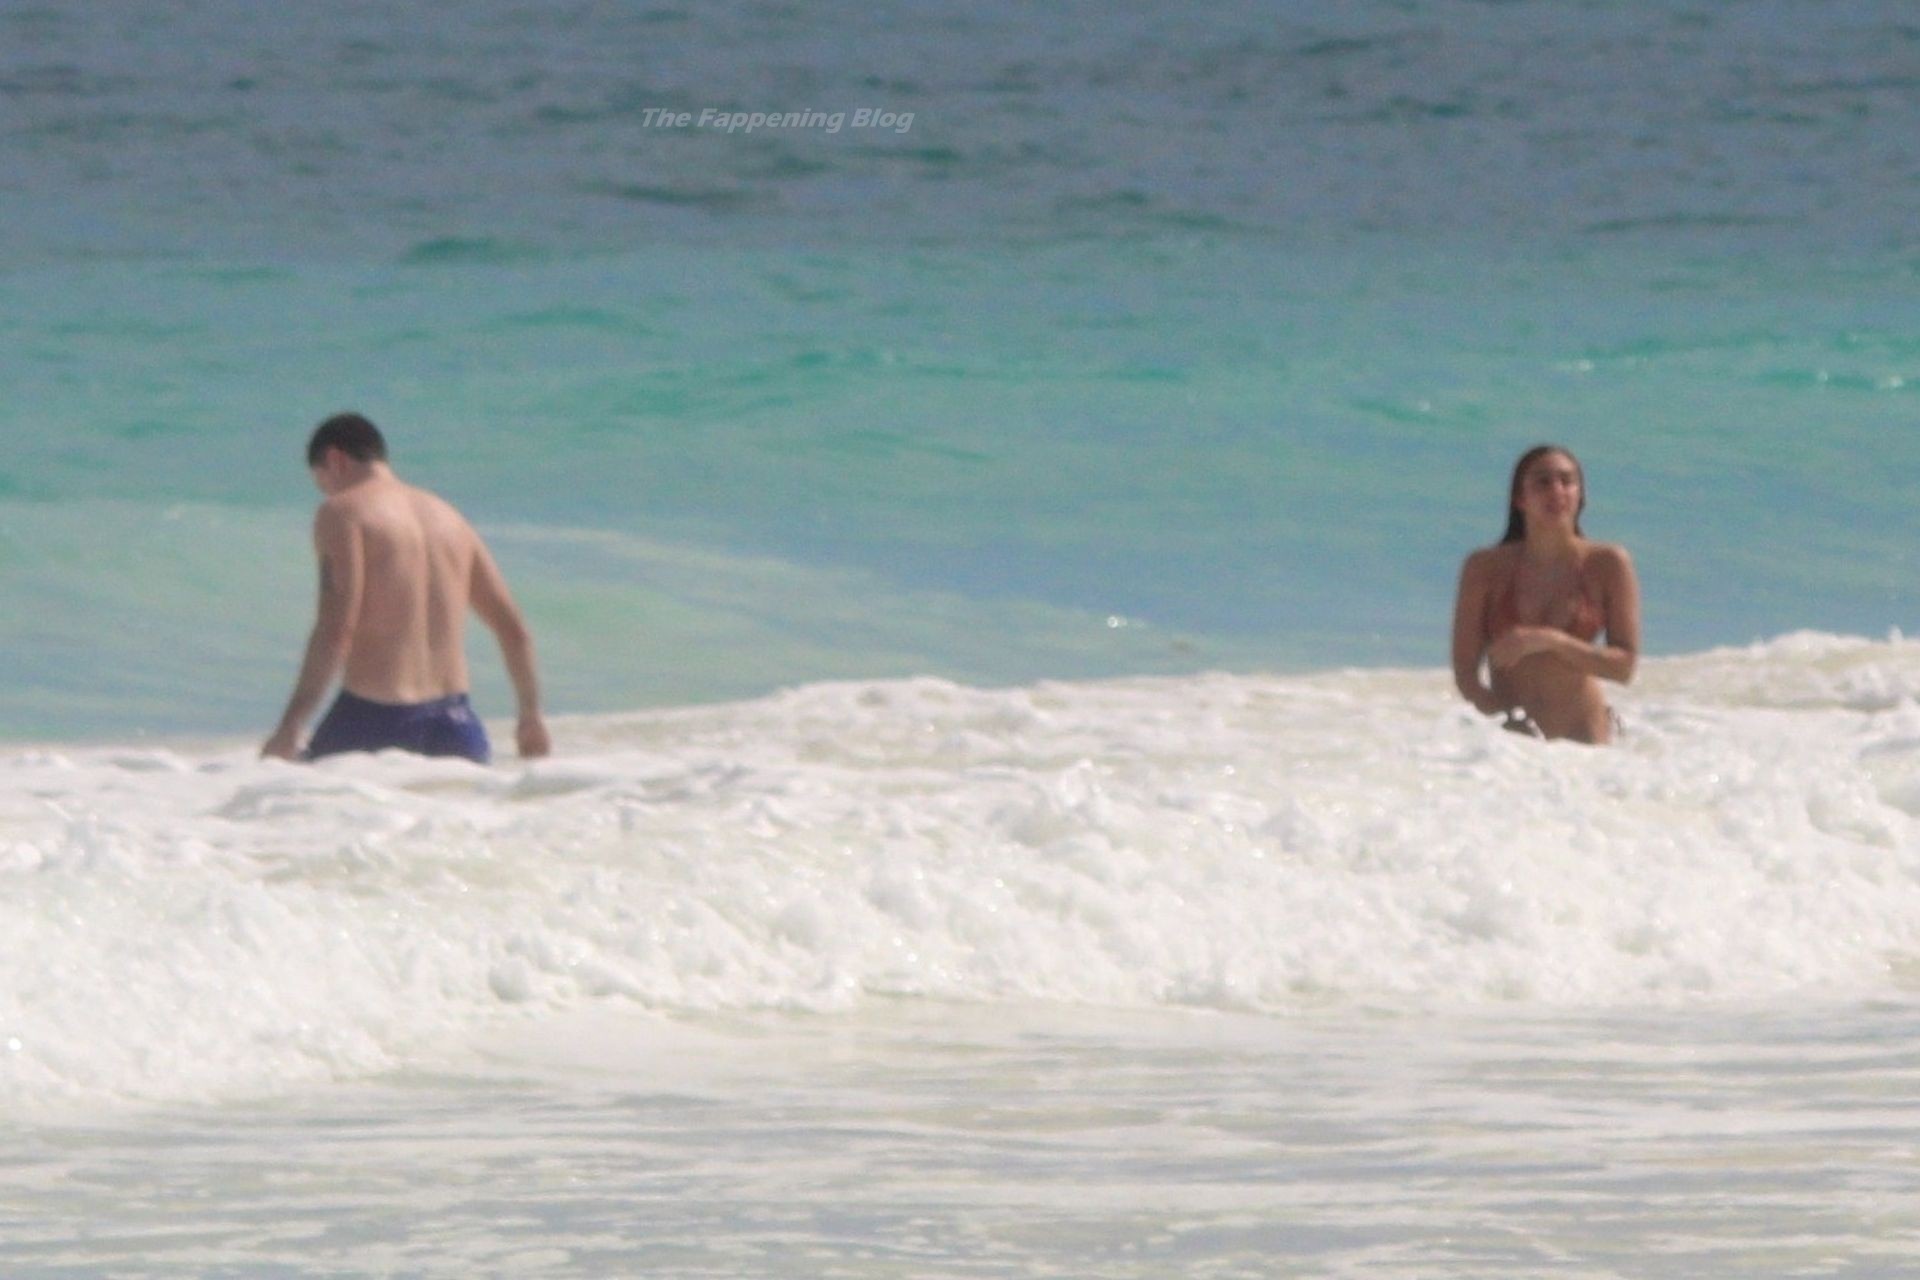 Lourdes Leon Wears a Tiny Bikini During a Getaway to Tulum with Her Boyfriend (19 Photos)